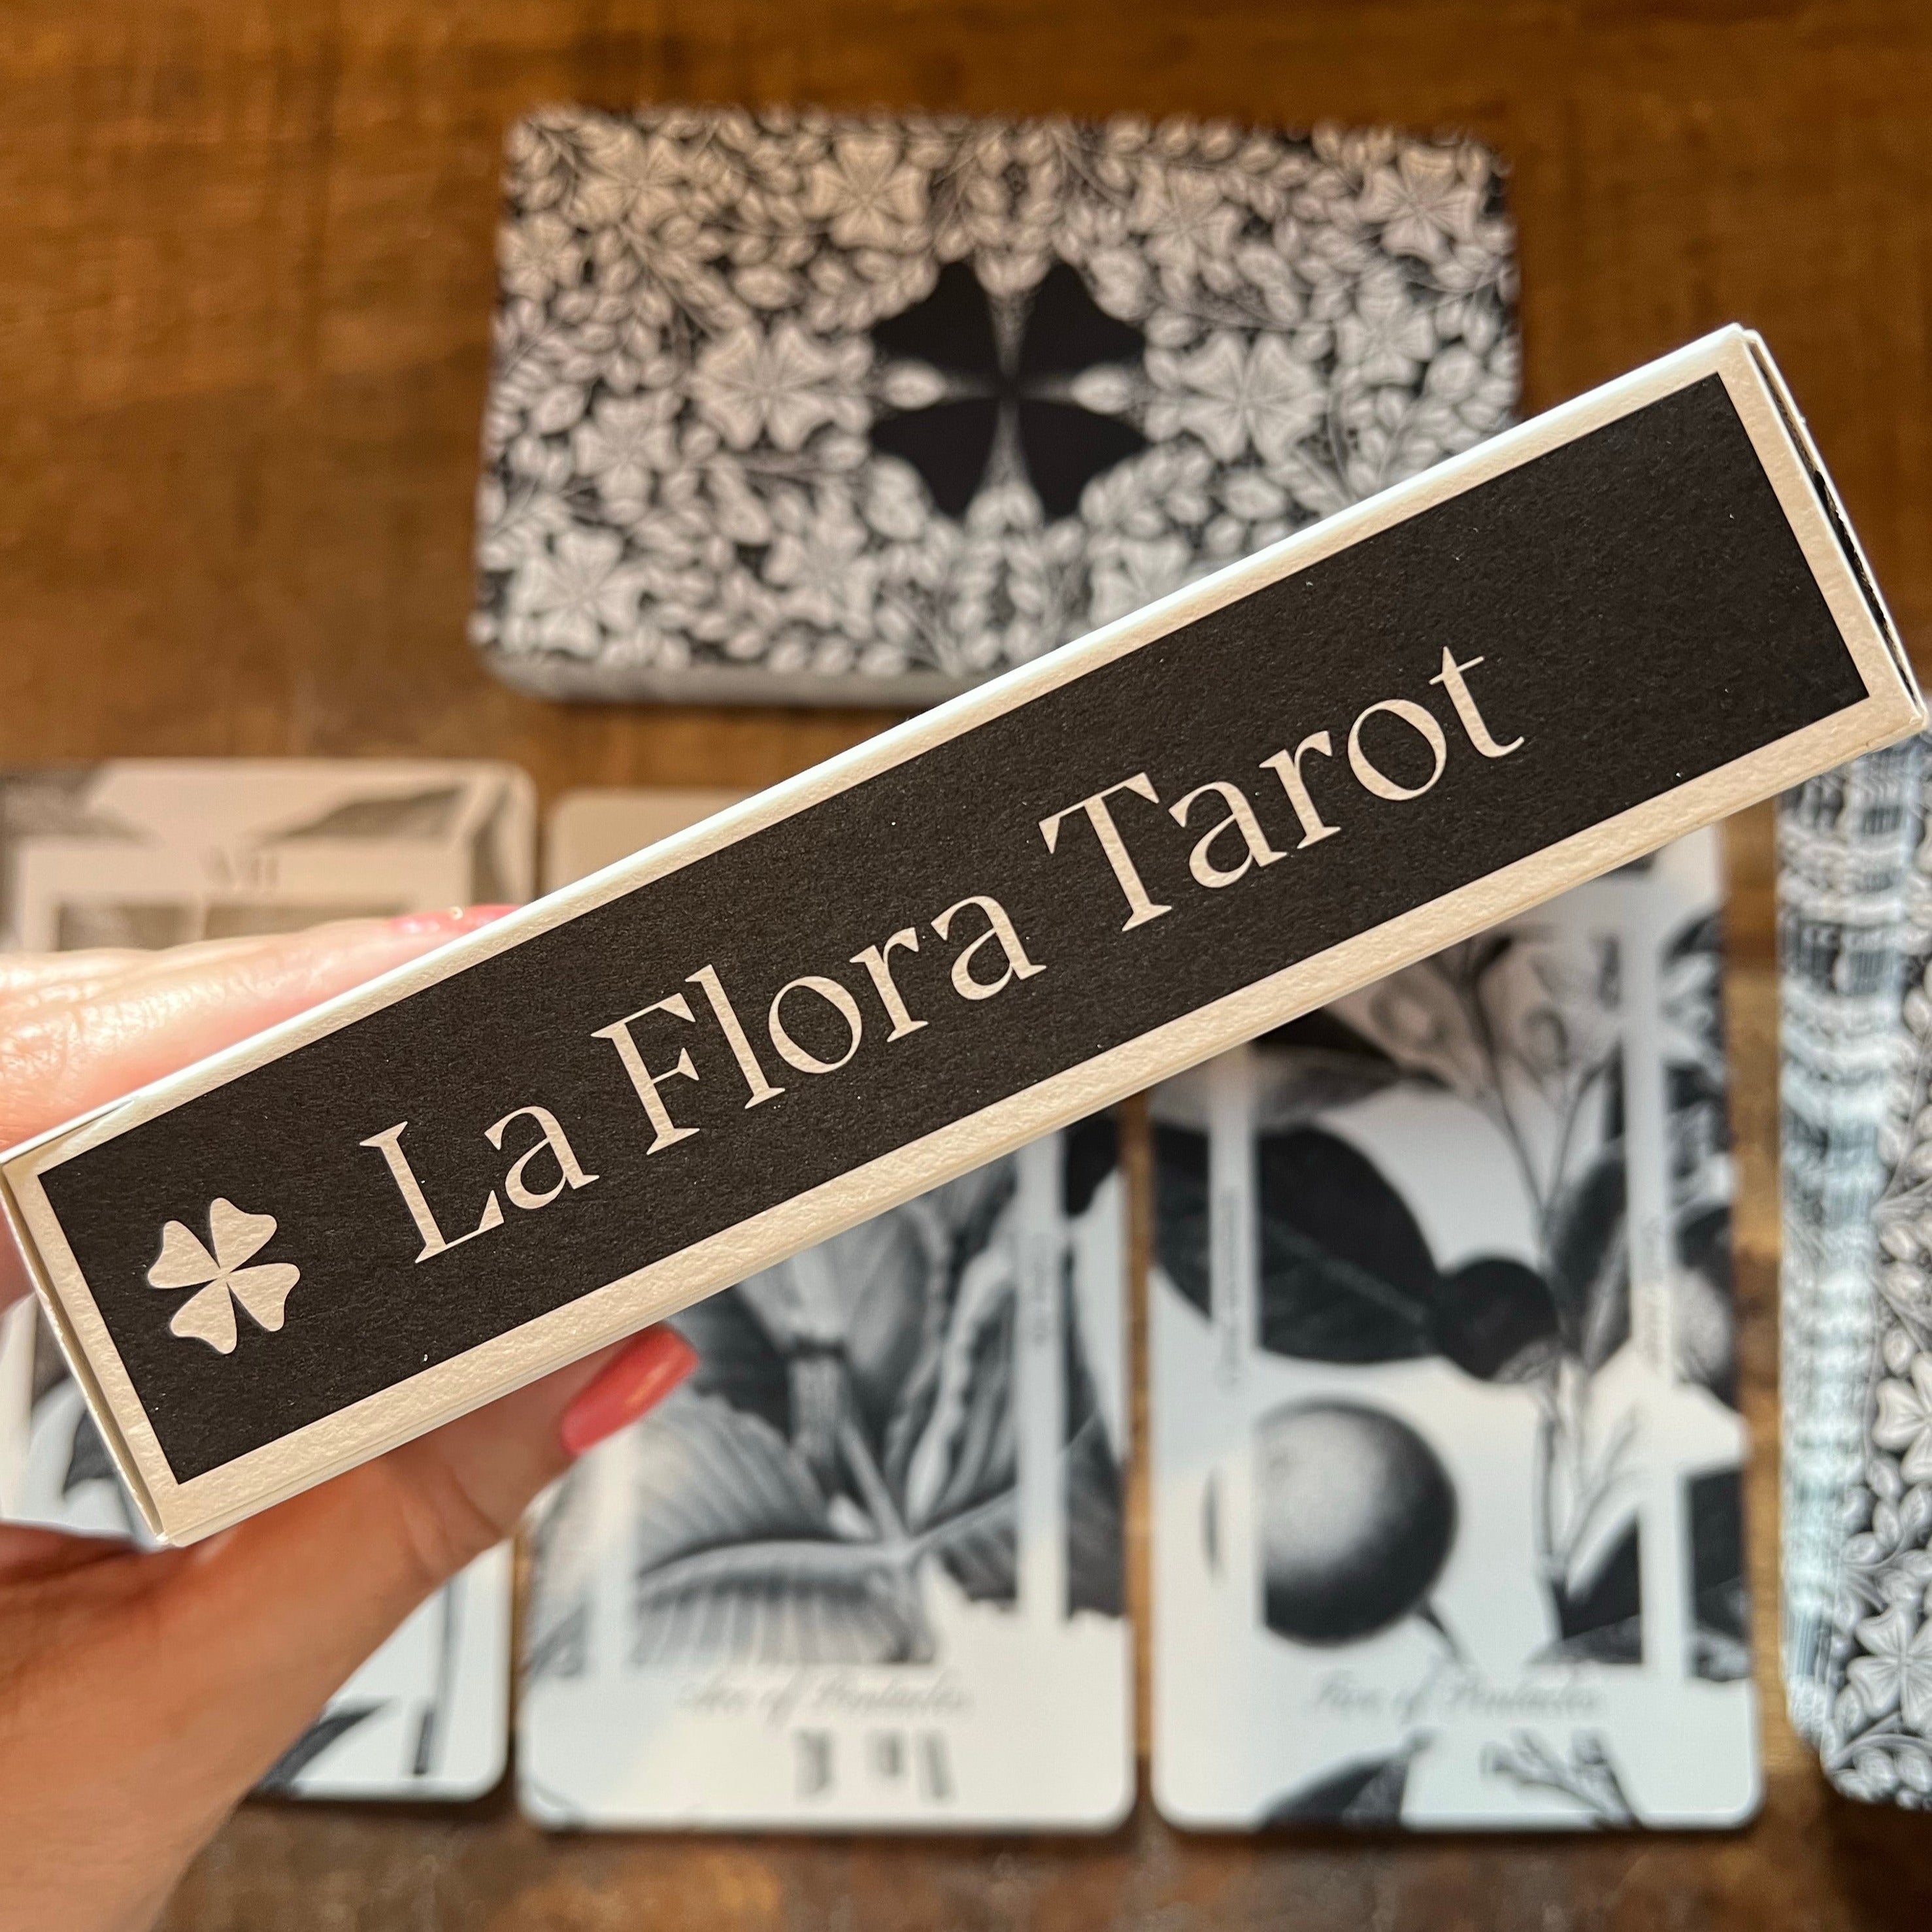 La Flora Tarot